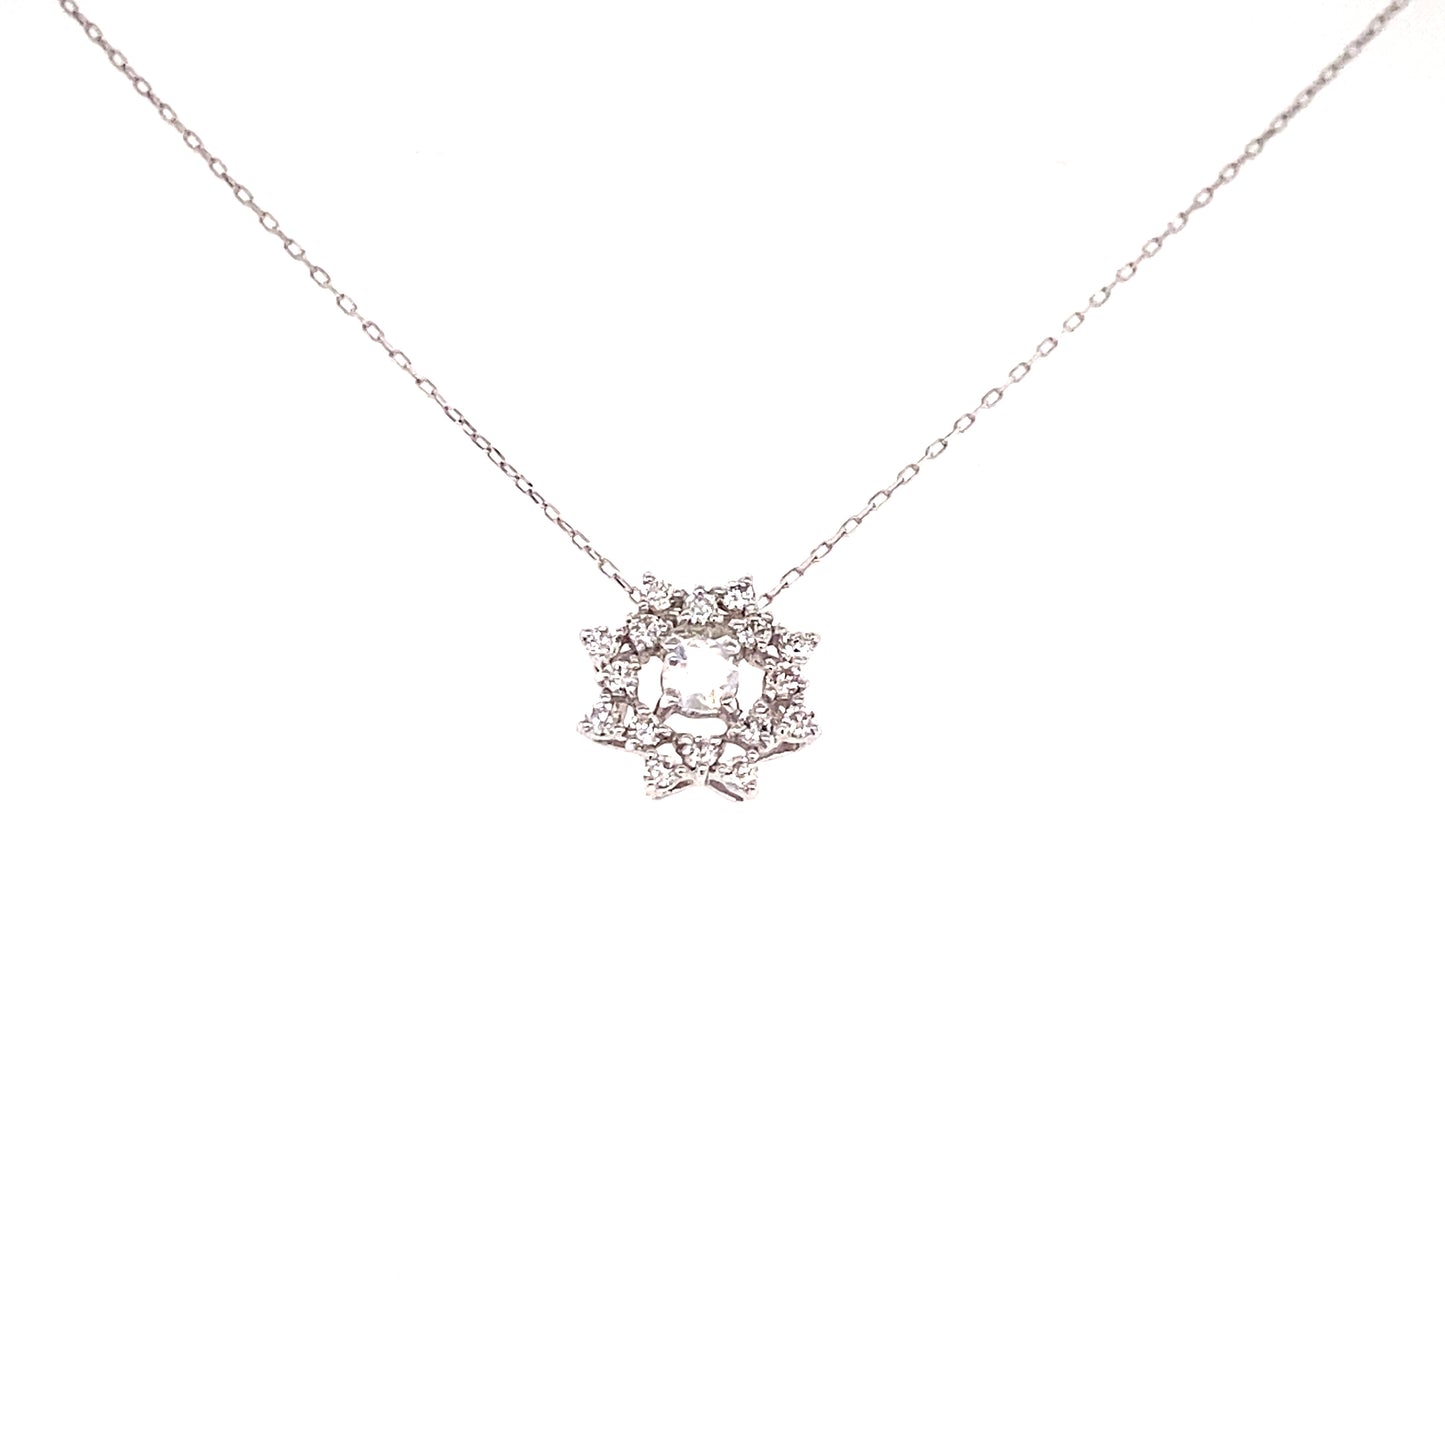 Flower Birthstone Necklace 0.16ct (Jun - Moonstone)